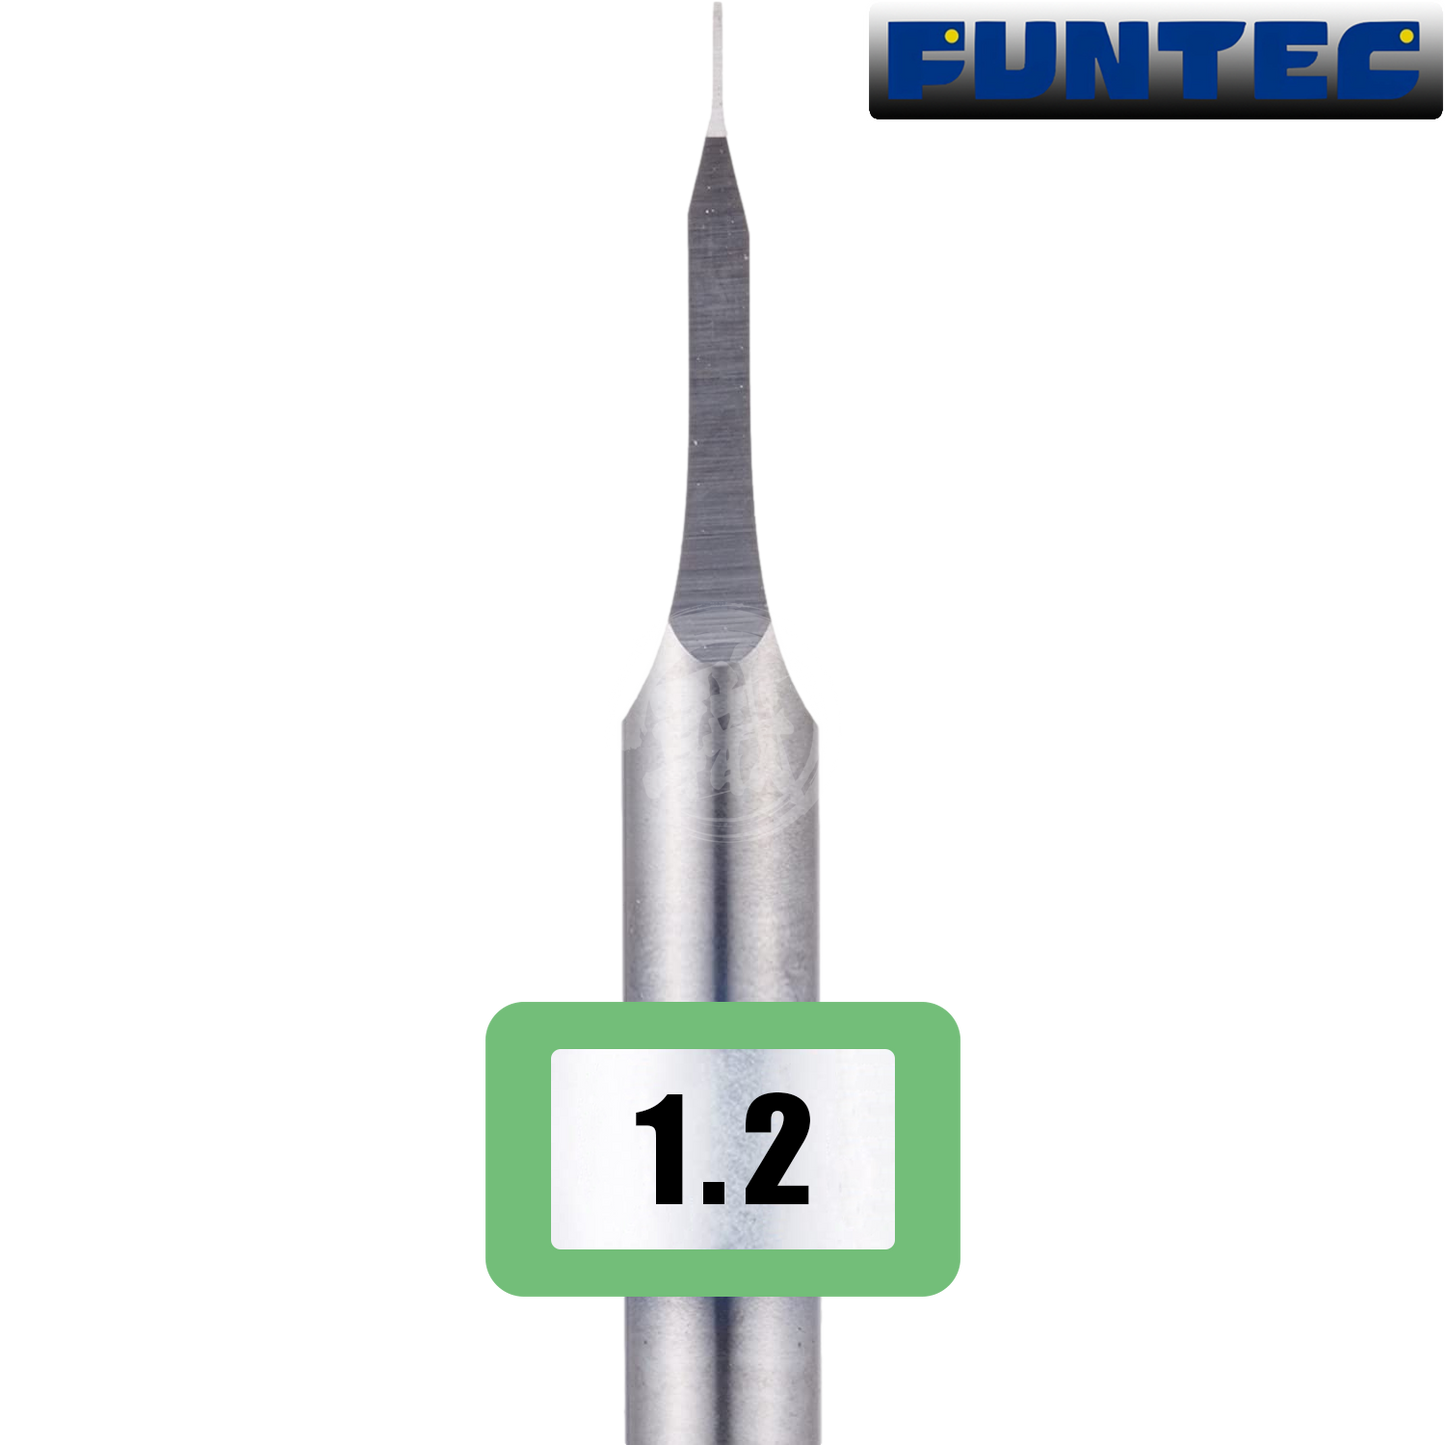 Funtec - Tungsten Carbide Chisel Bits [1.2mm] - ShokuninGunpla